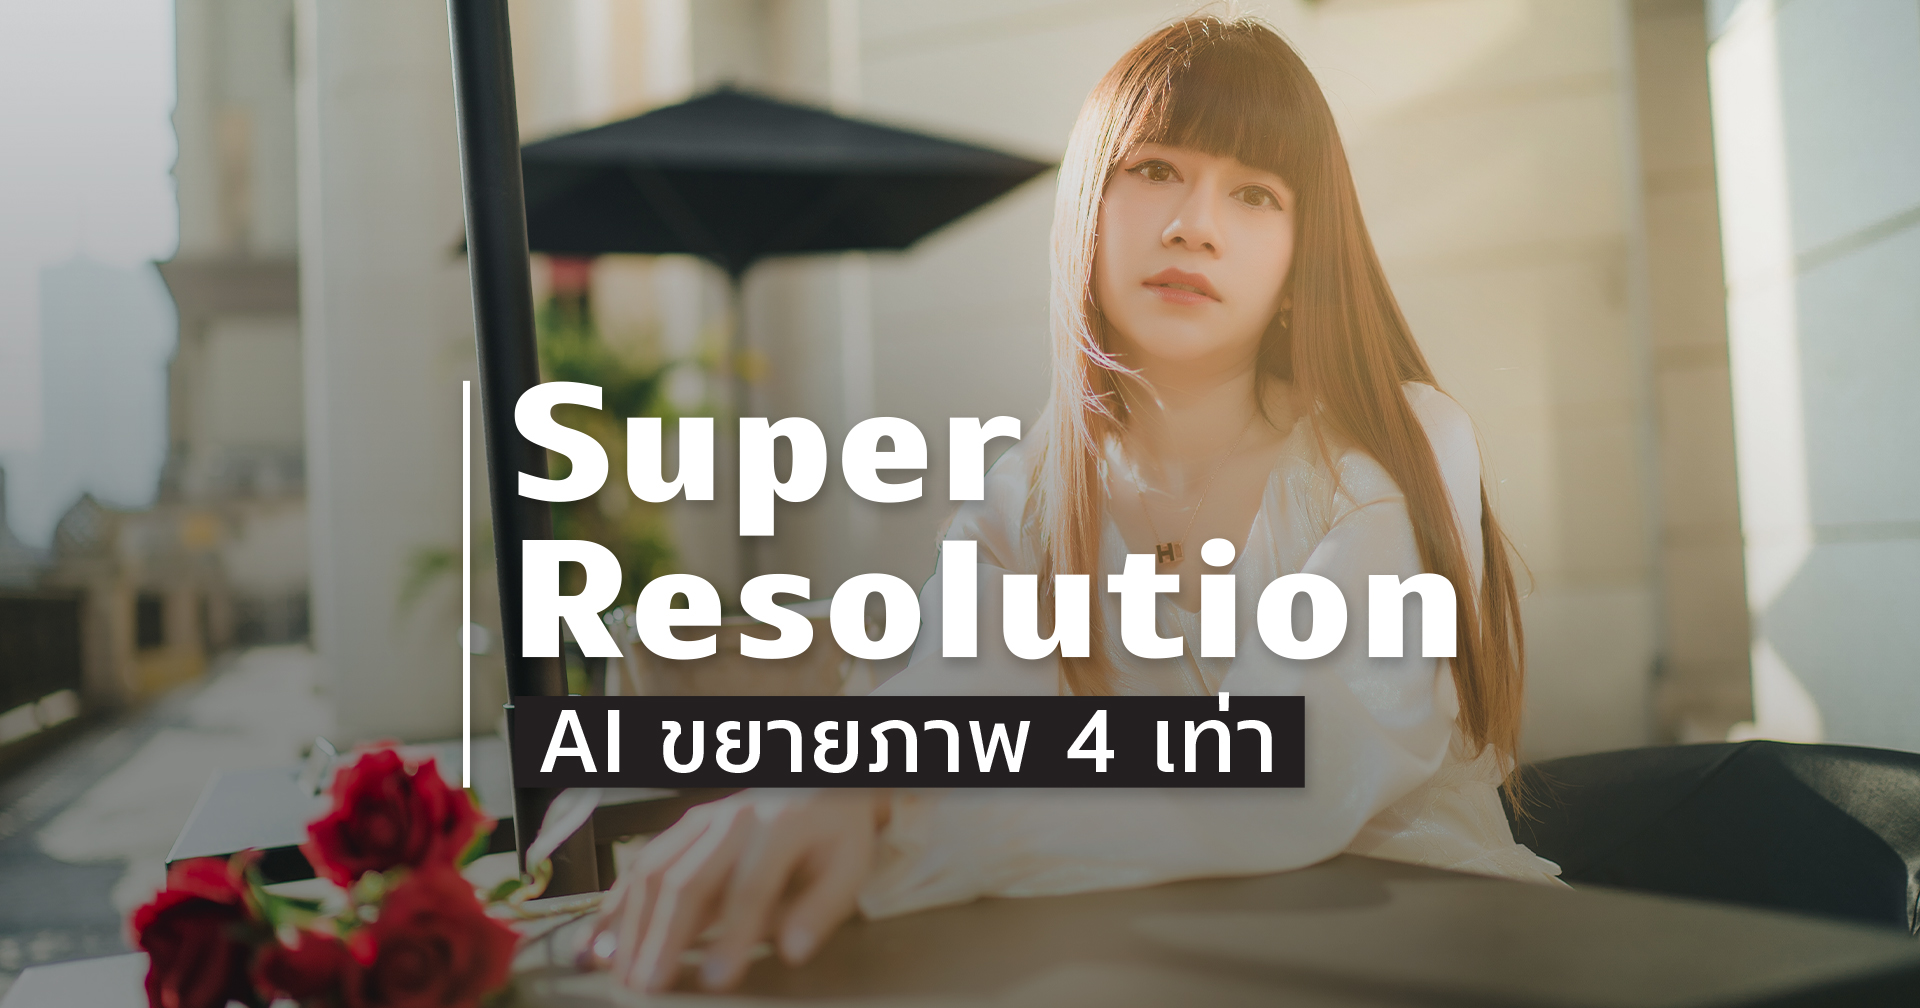 Adobe Photoshop เพิ่มฟีเจอร์ใหม่ ‘Super Resolution’ ขยายภาพด้วย AI ละเอียดขึ้น 4 เท่า!